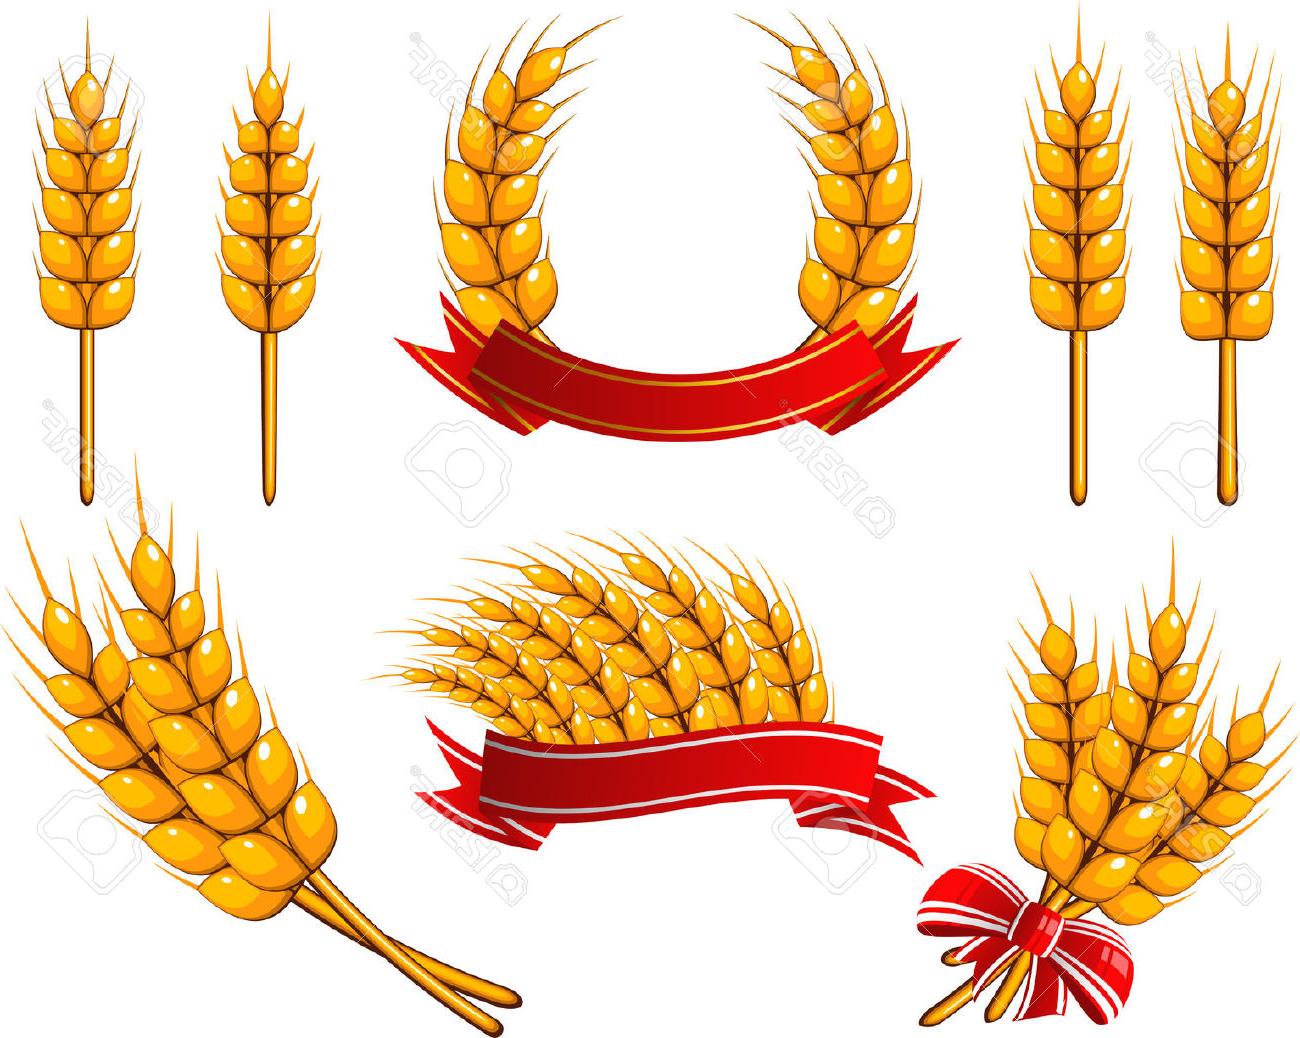 Corn Stalk Bundle PNG - 137999